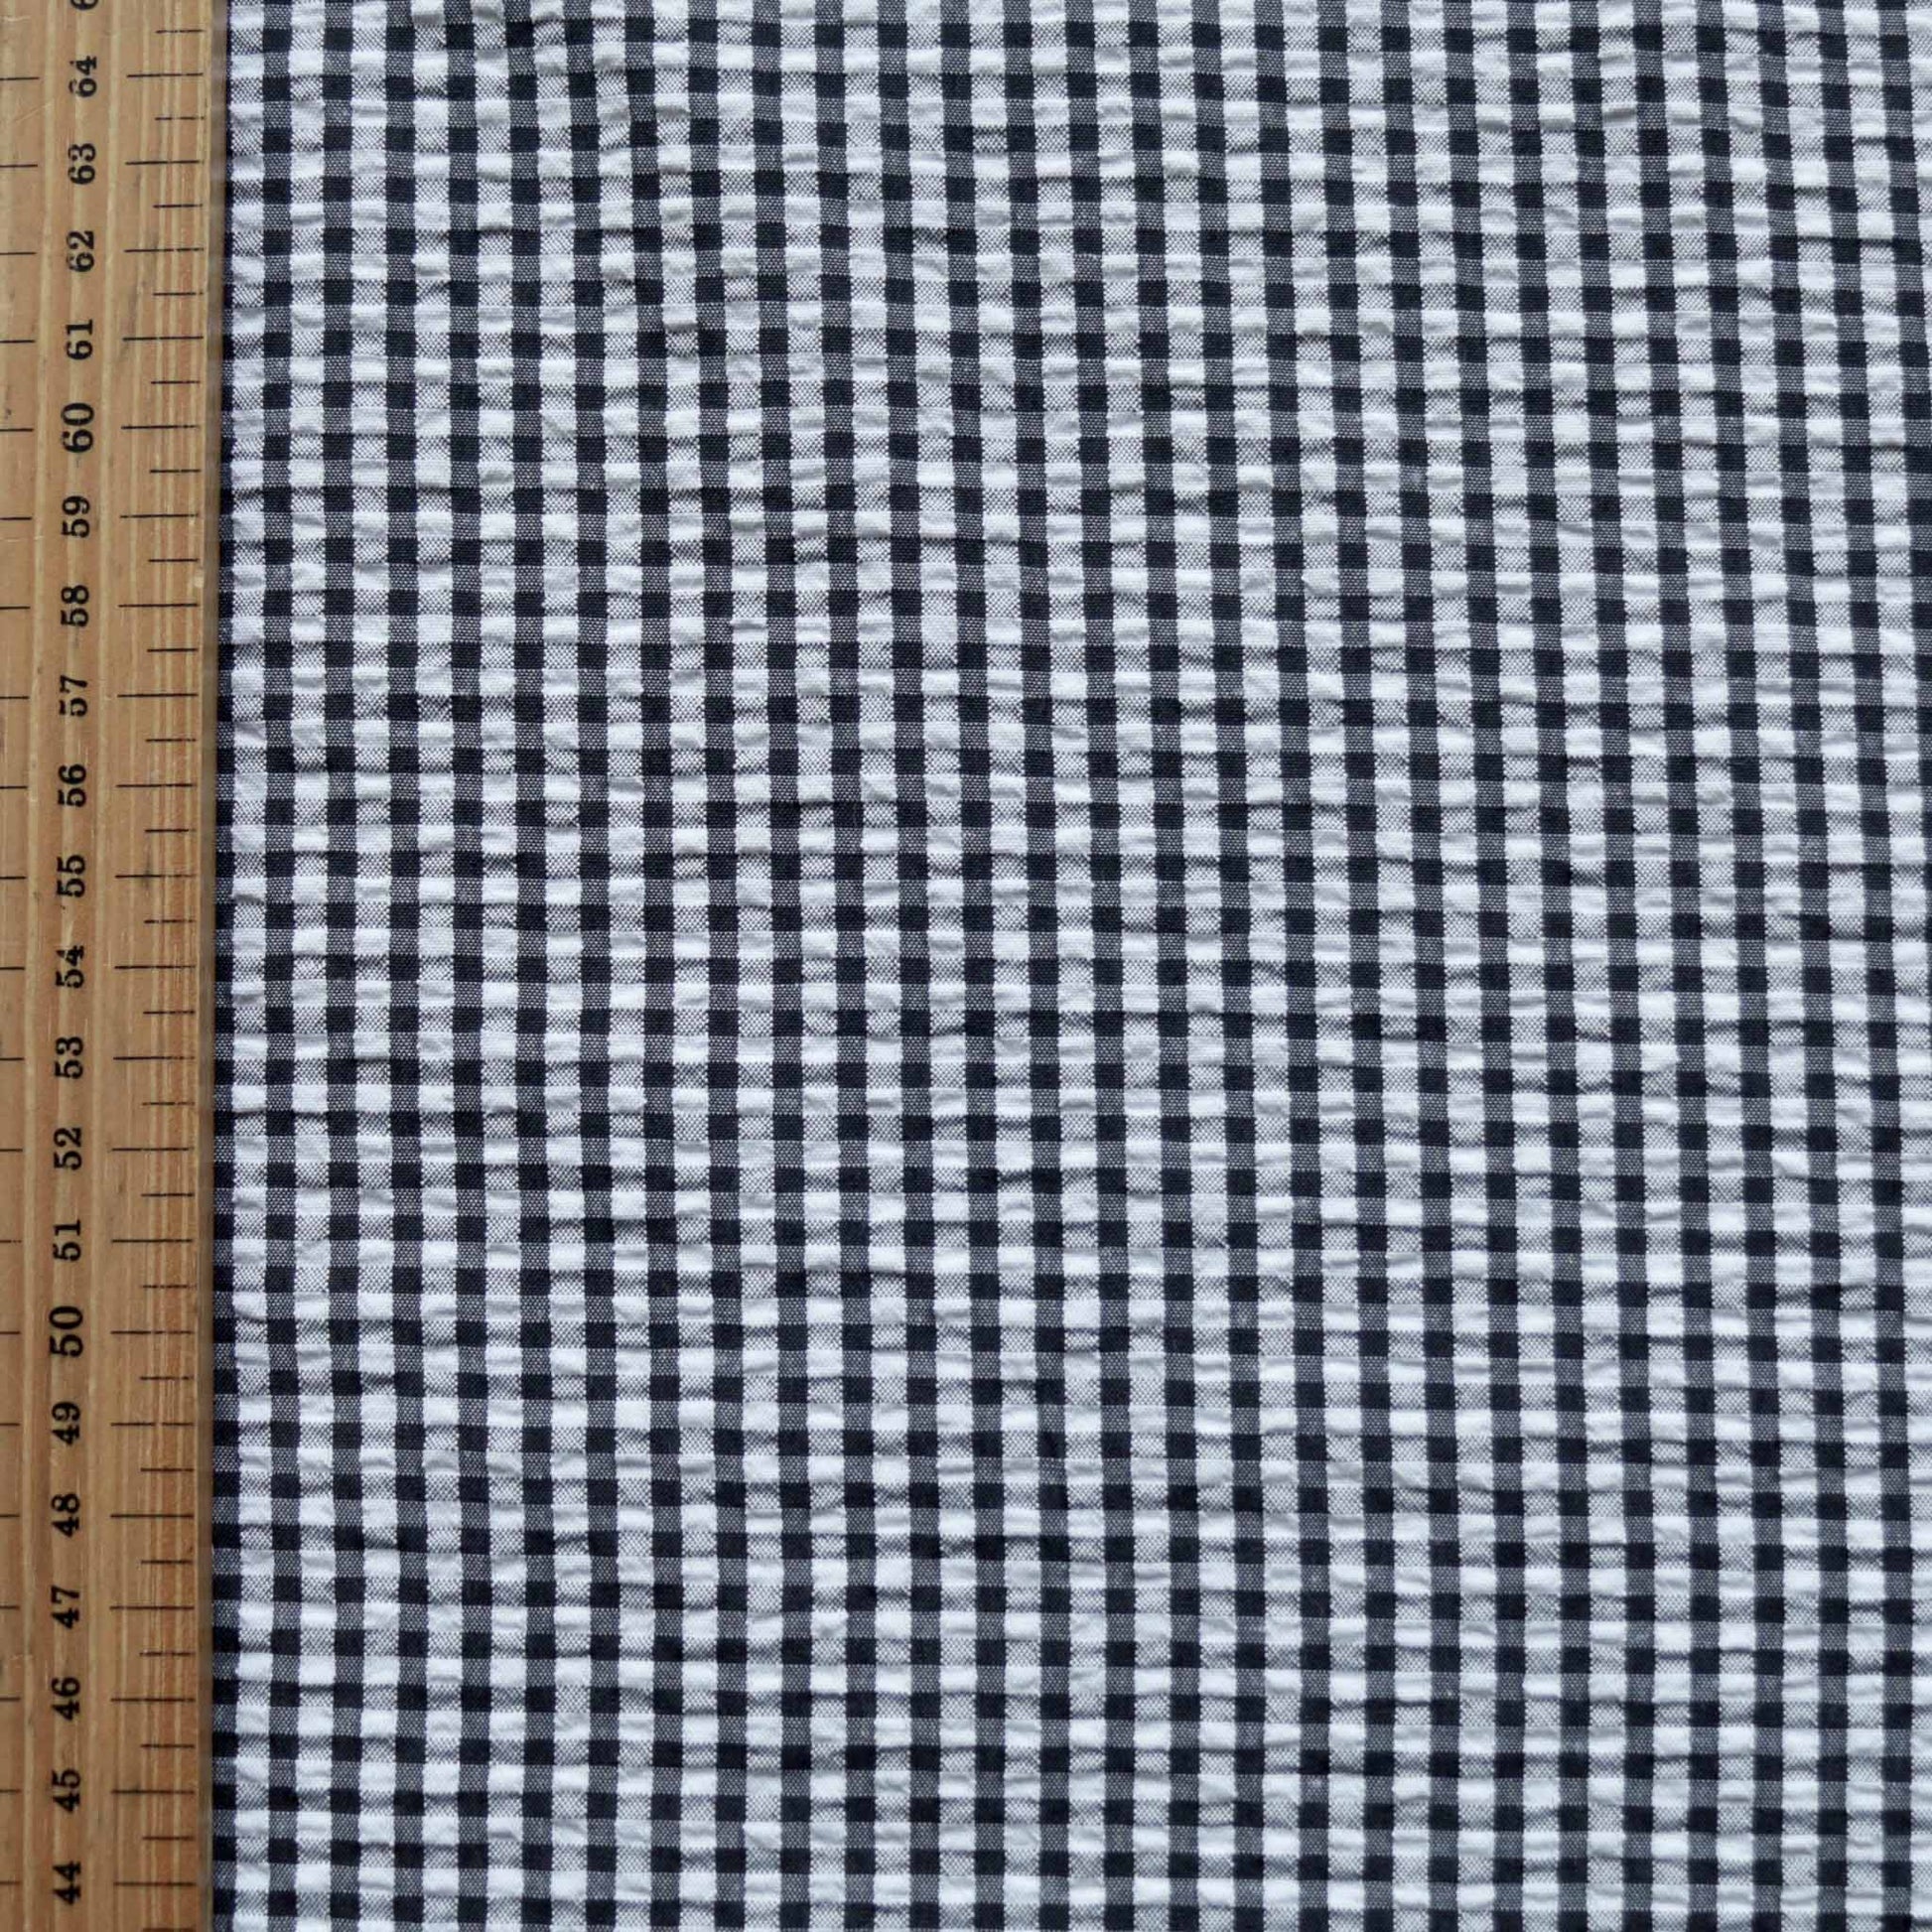 metre black and white seersucker gingham print dressmaking fabric